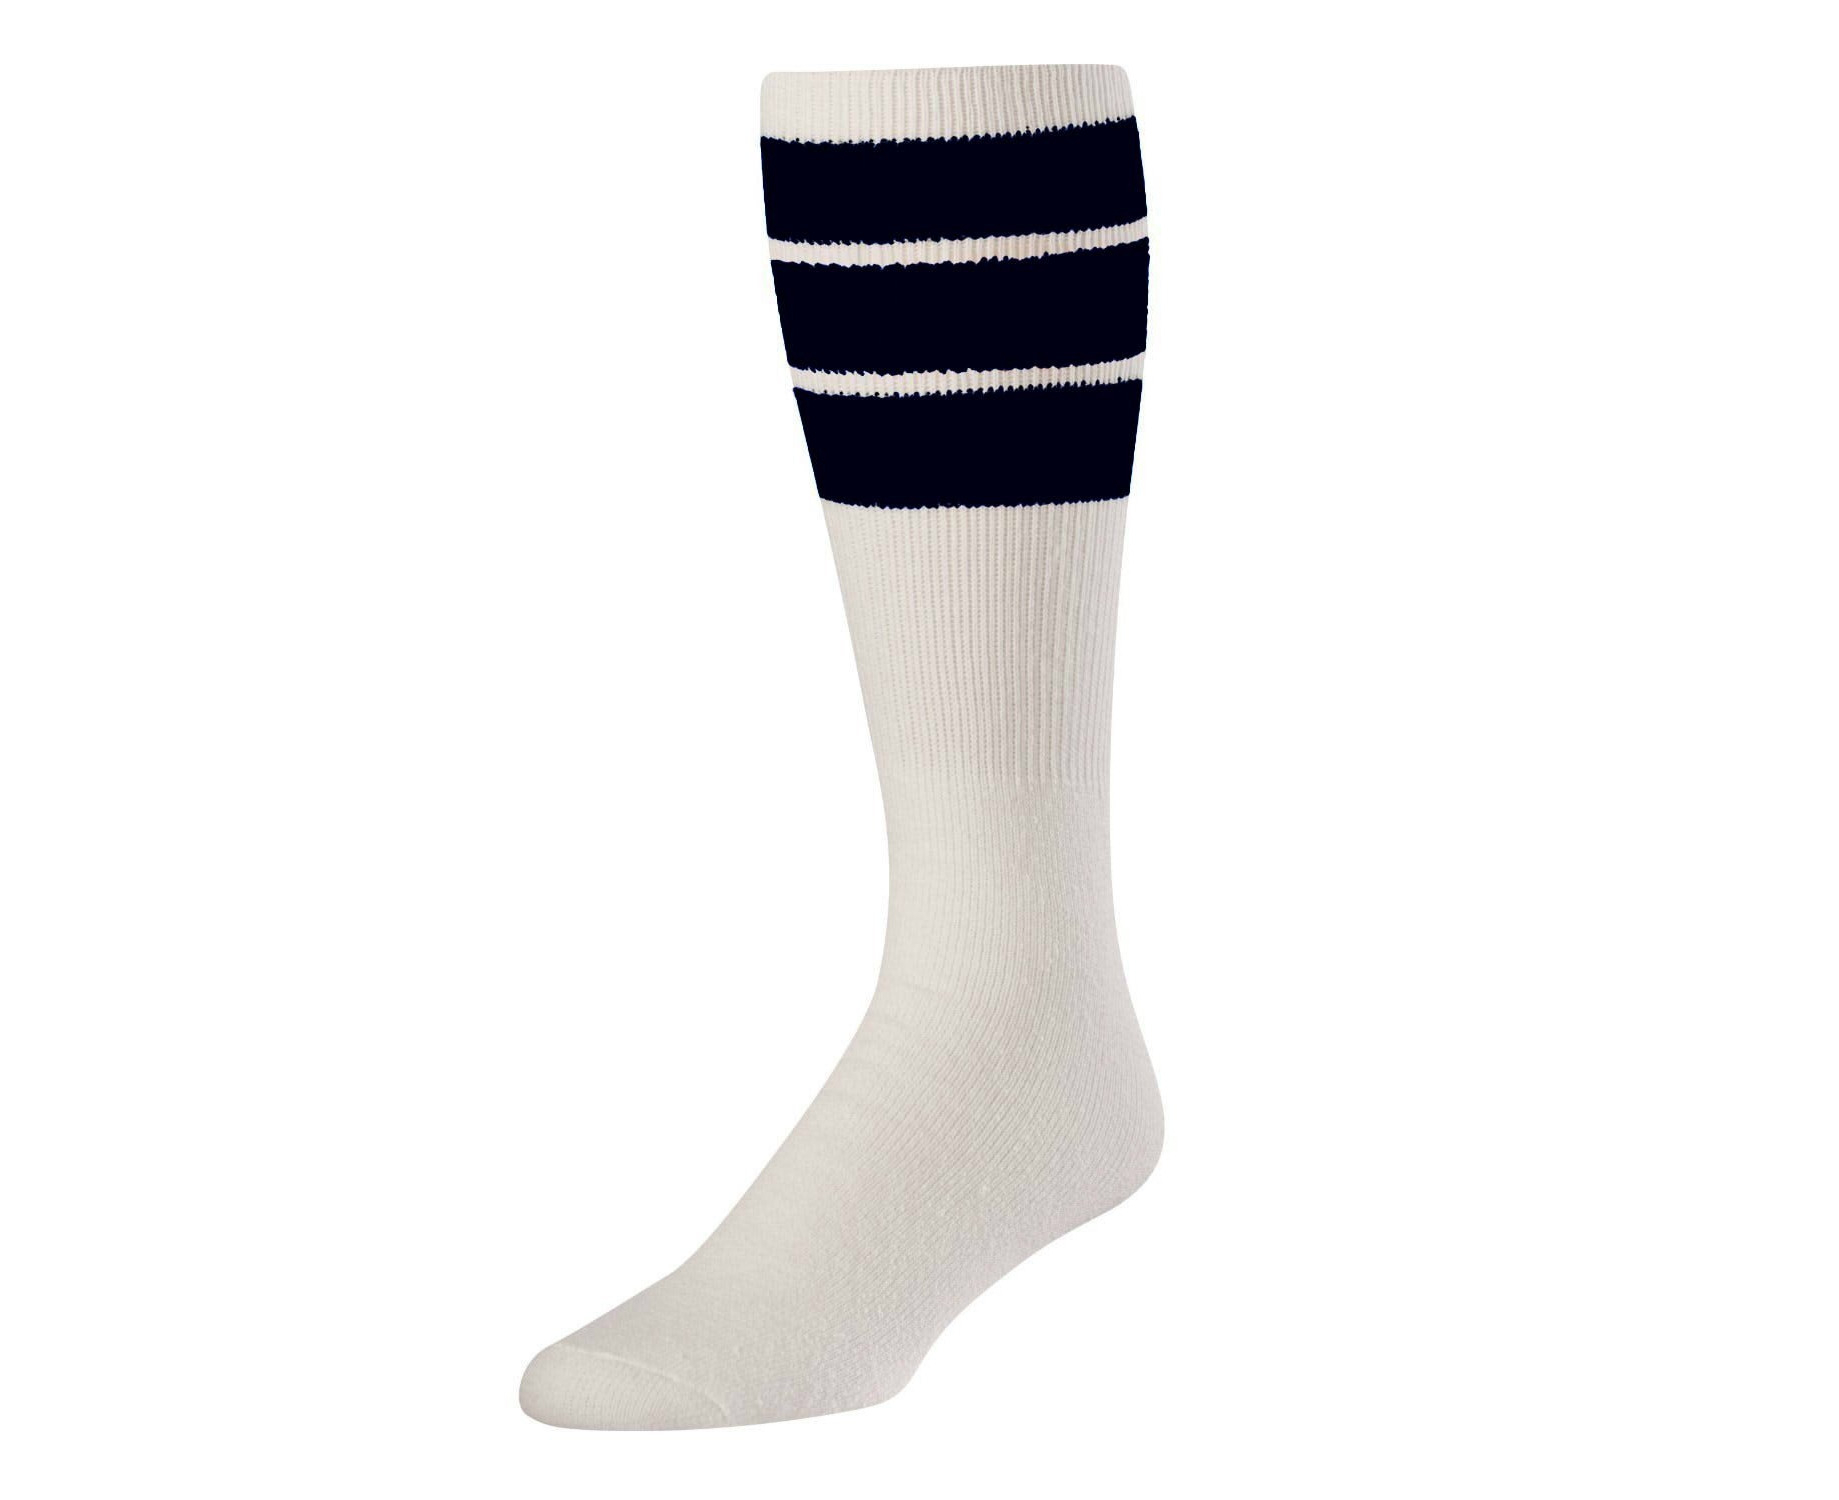 (Large, White/Navy) - TCK Retro 3 Stripe Tube Socks | Catch.com.au